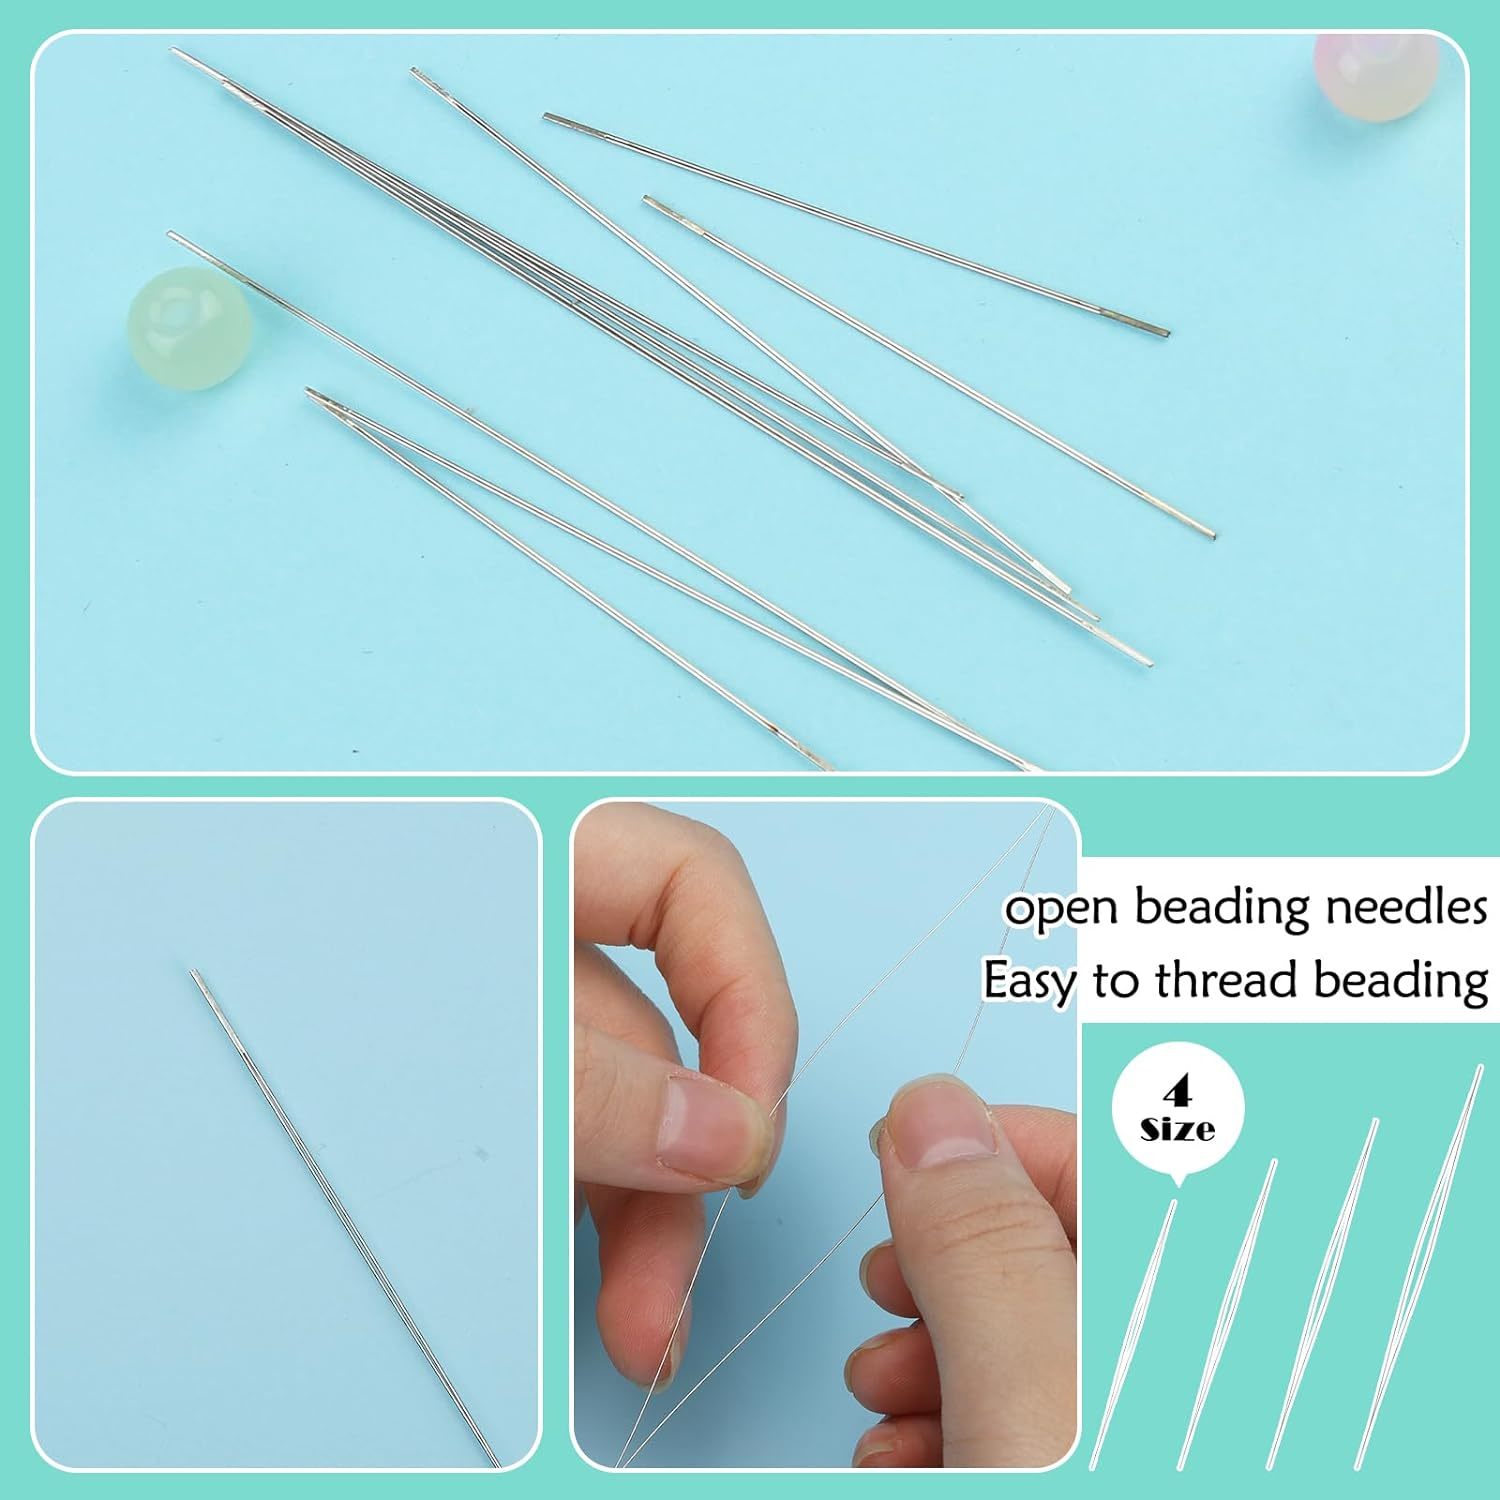 The BeadSmith 5-Inch Big Eye Beading Needles 4-Pack